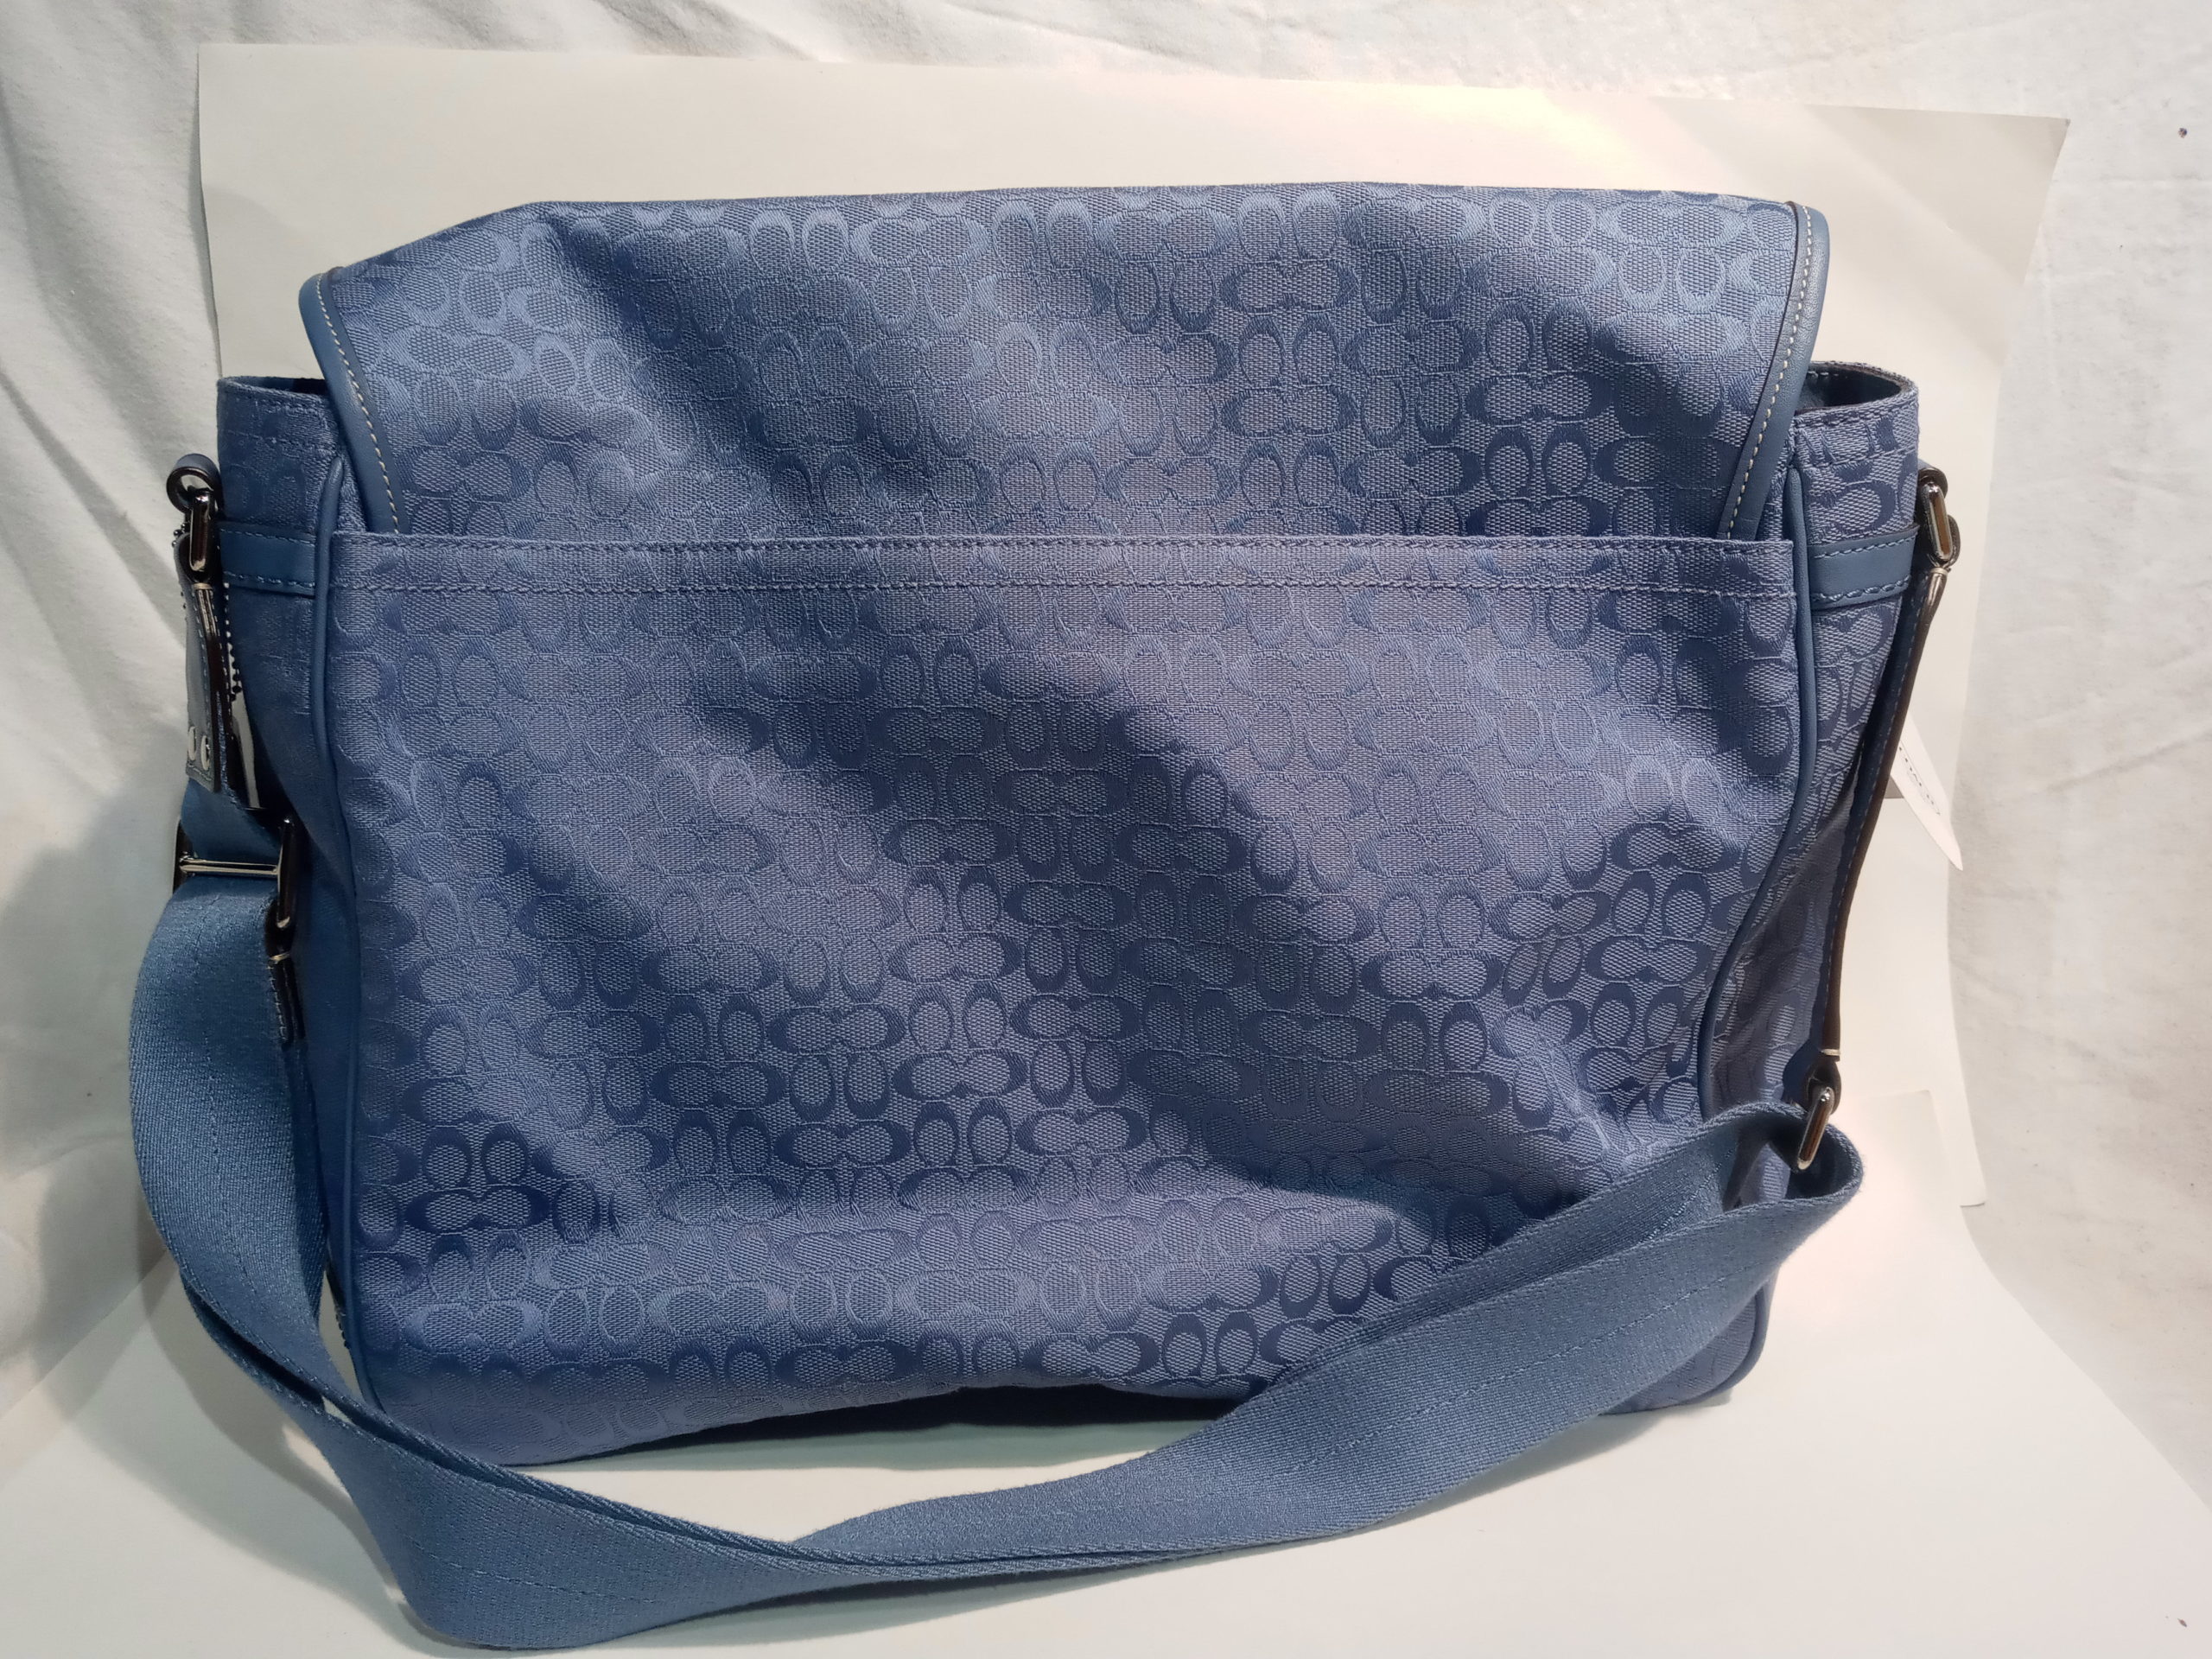 coach blue bag